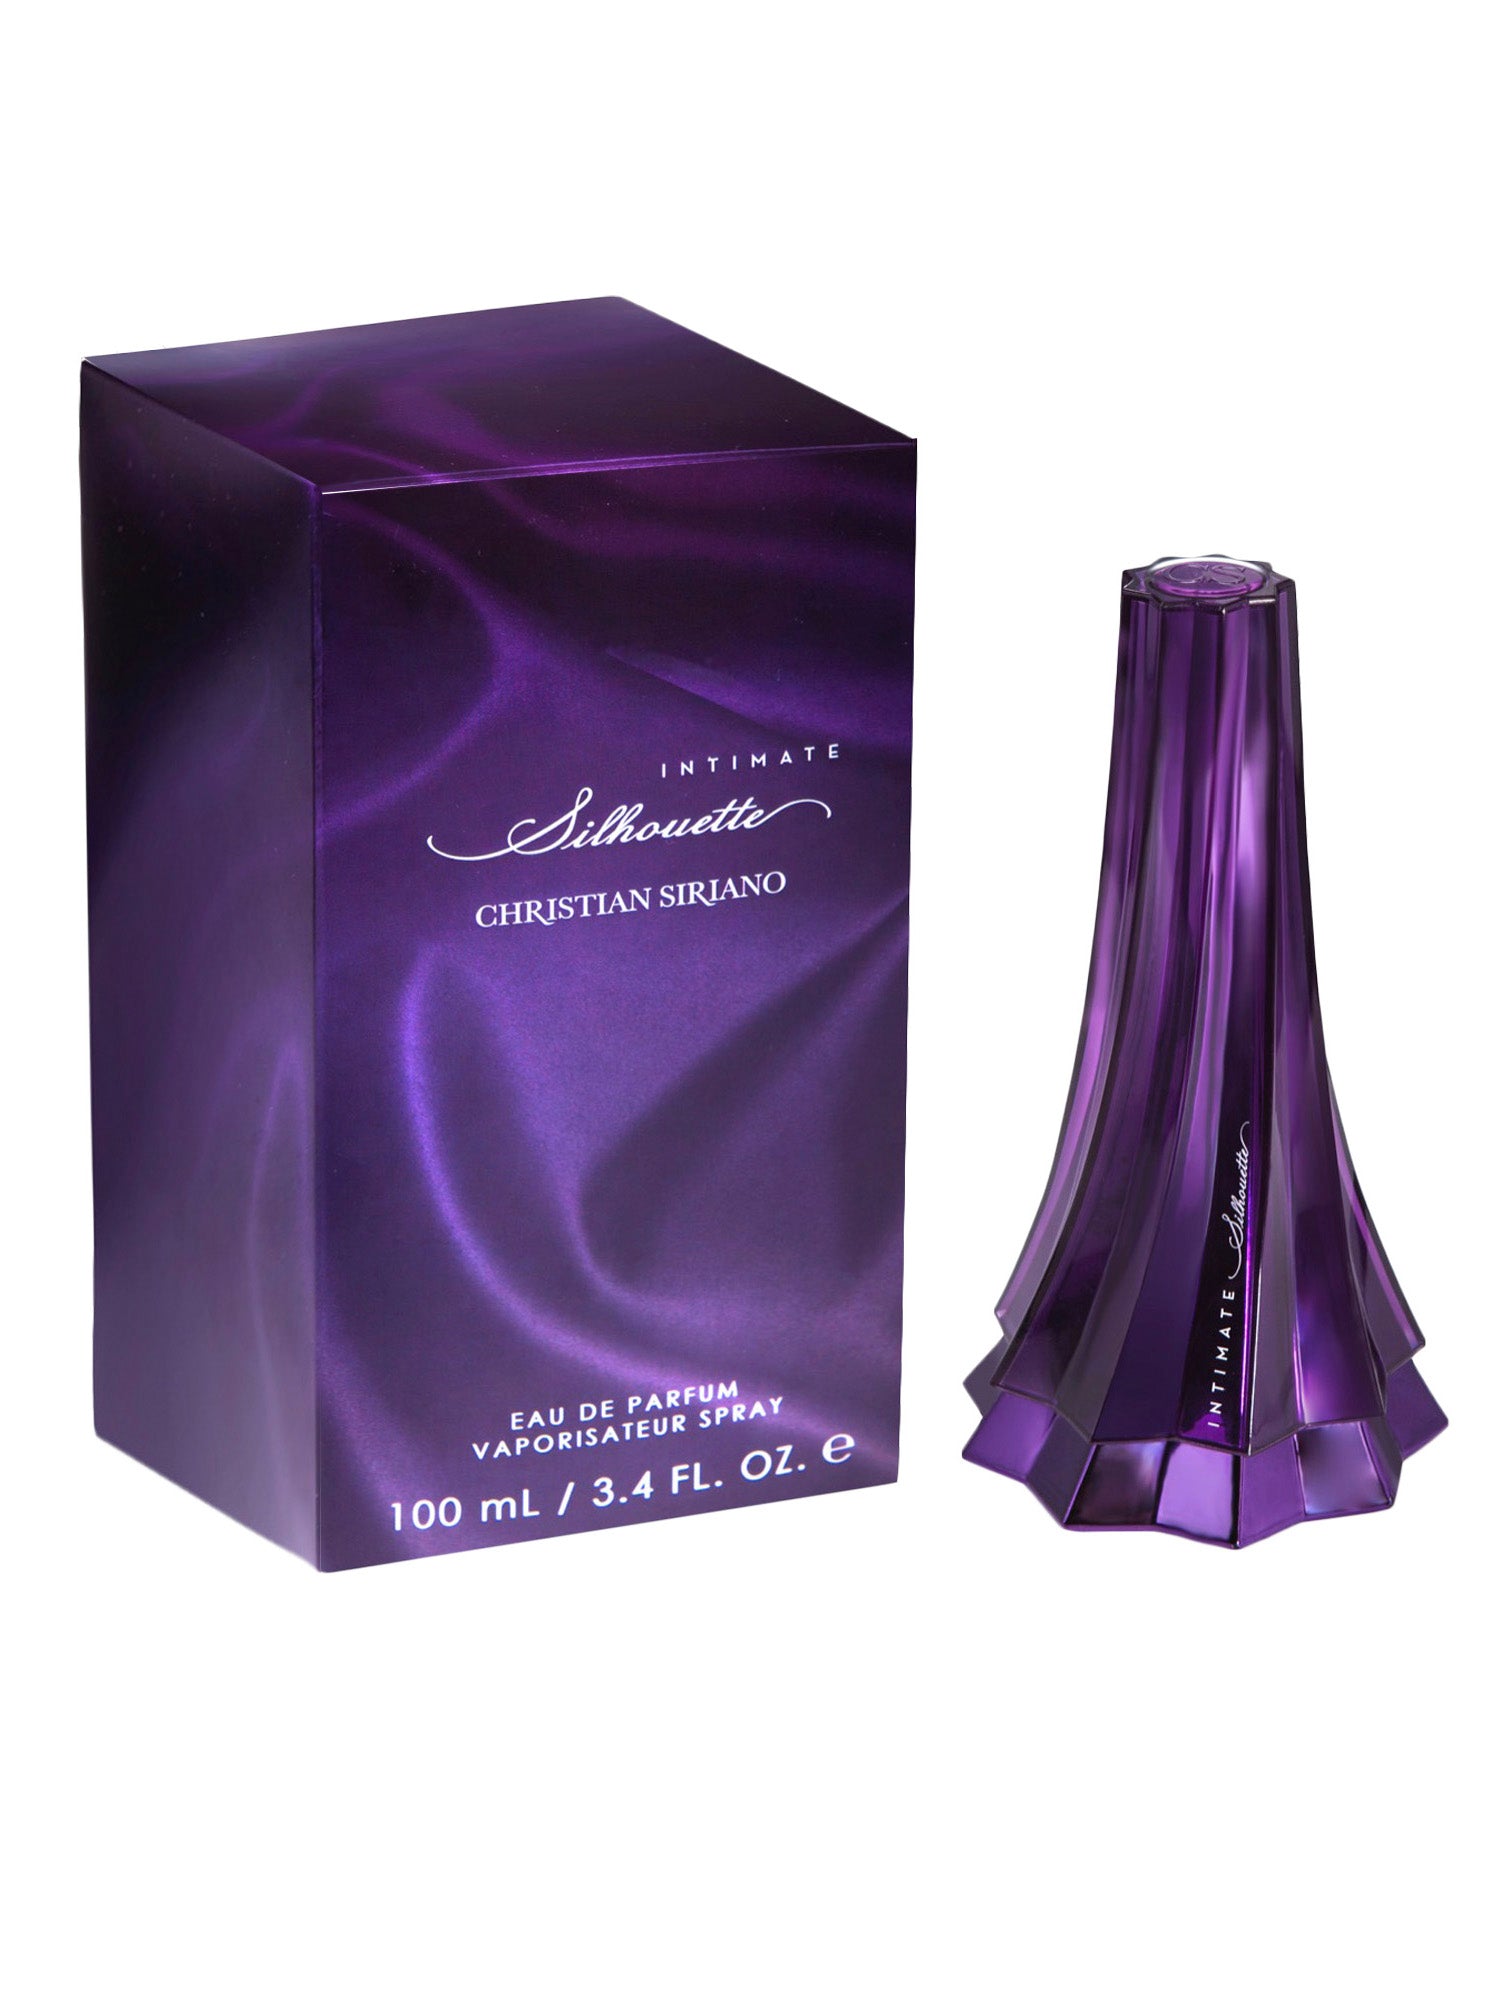 Intimate Silhouette 3.4 oz Eau de Parfum